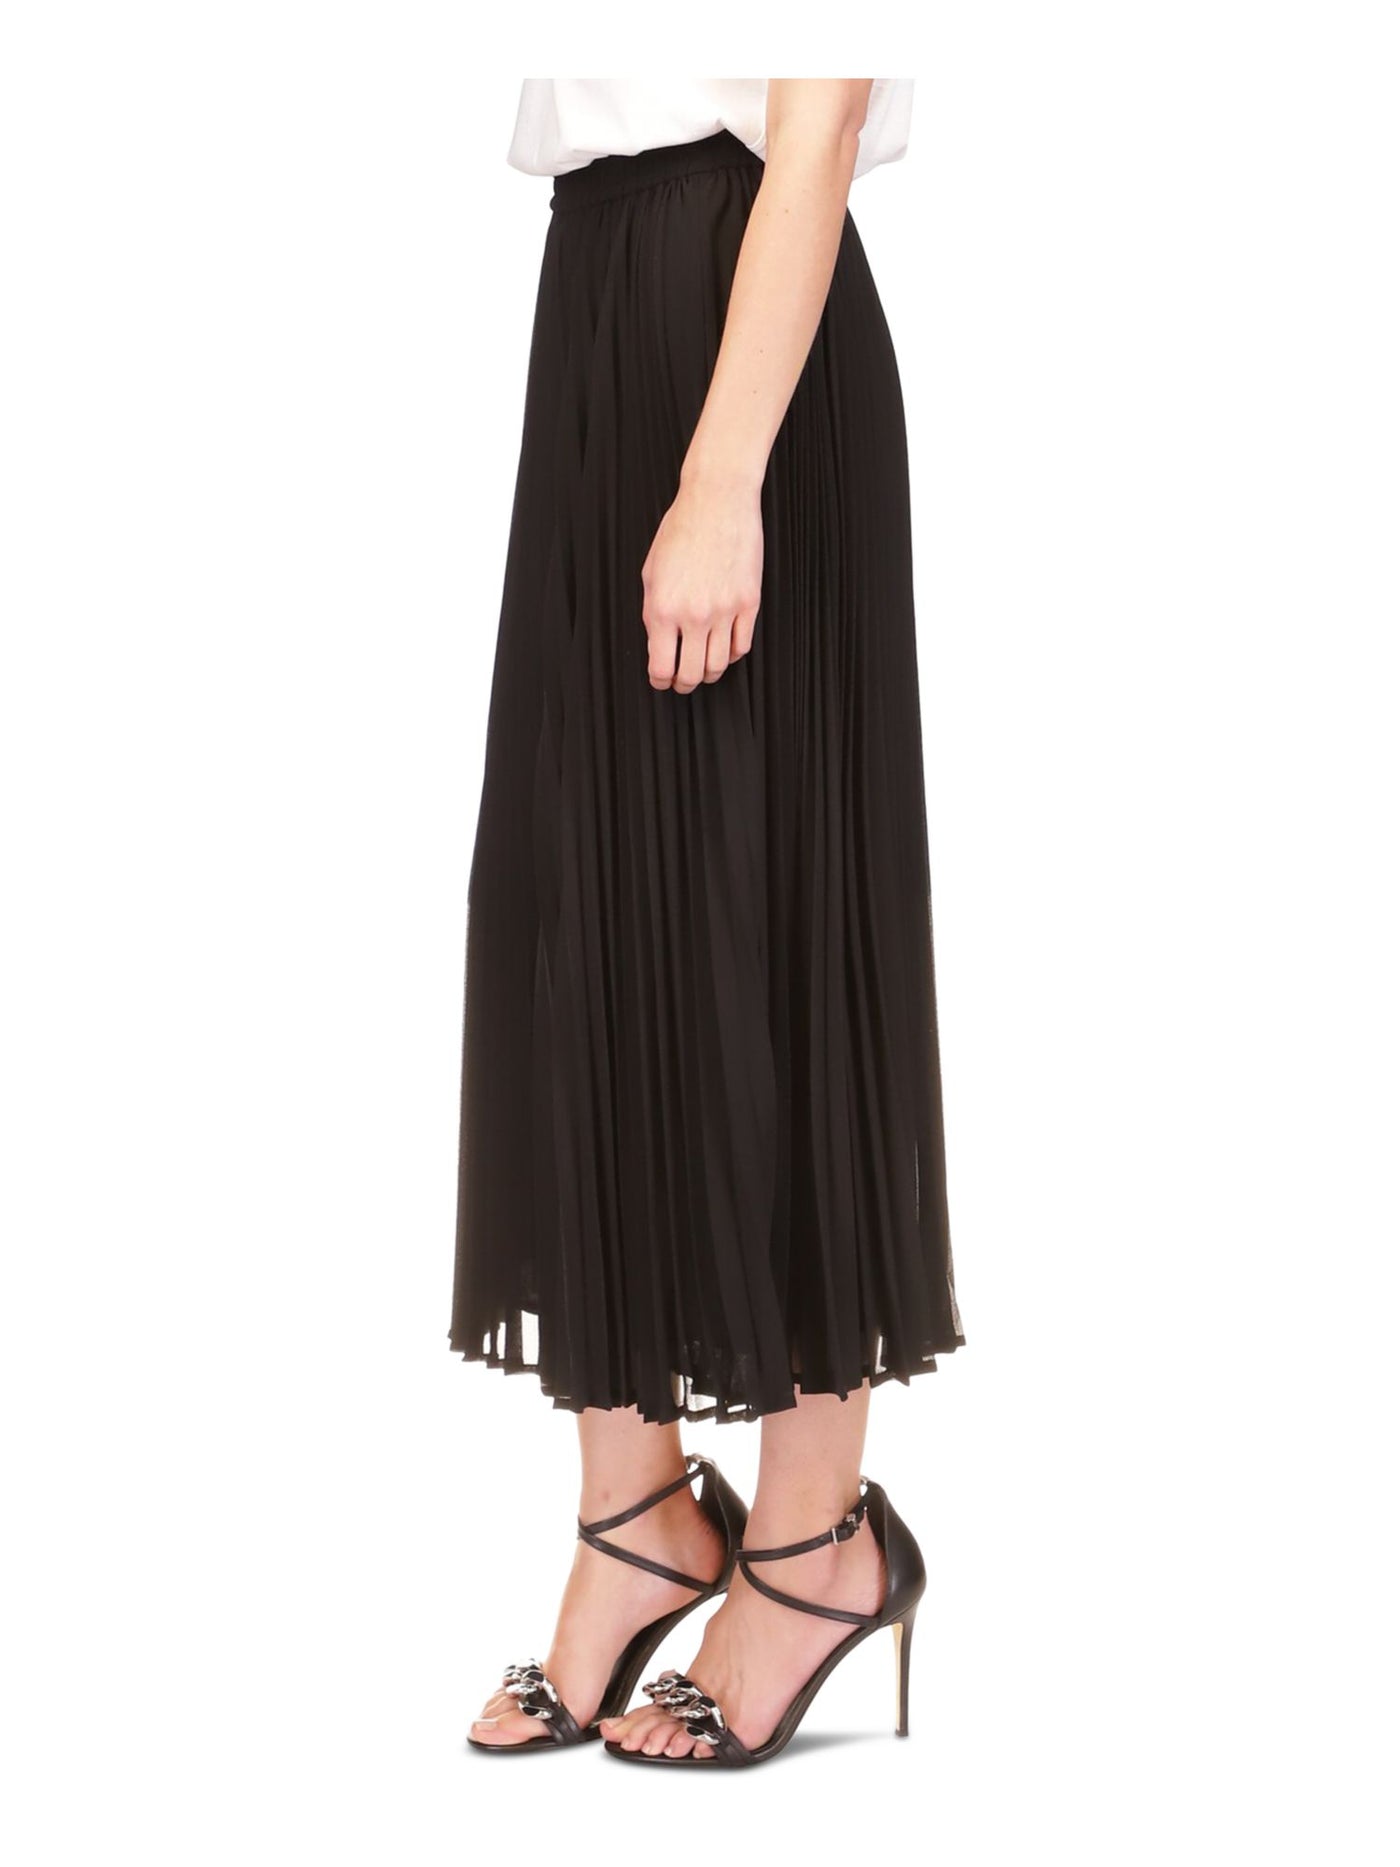 MICHAEL MICHAEL KORS Womens Black Lined Elastic Waist Pull-on Midi Wear To Work Pleated Skirt XL